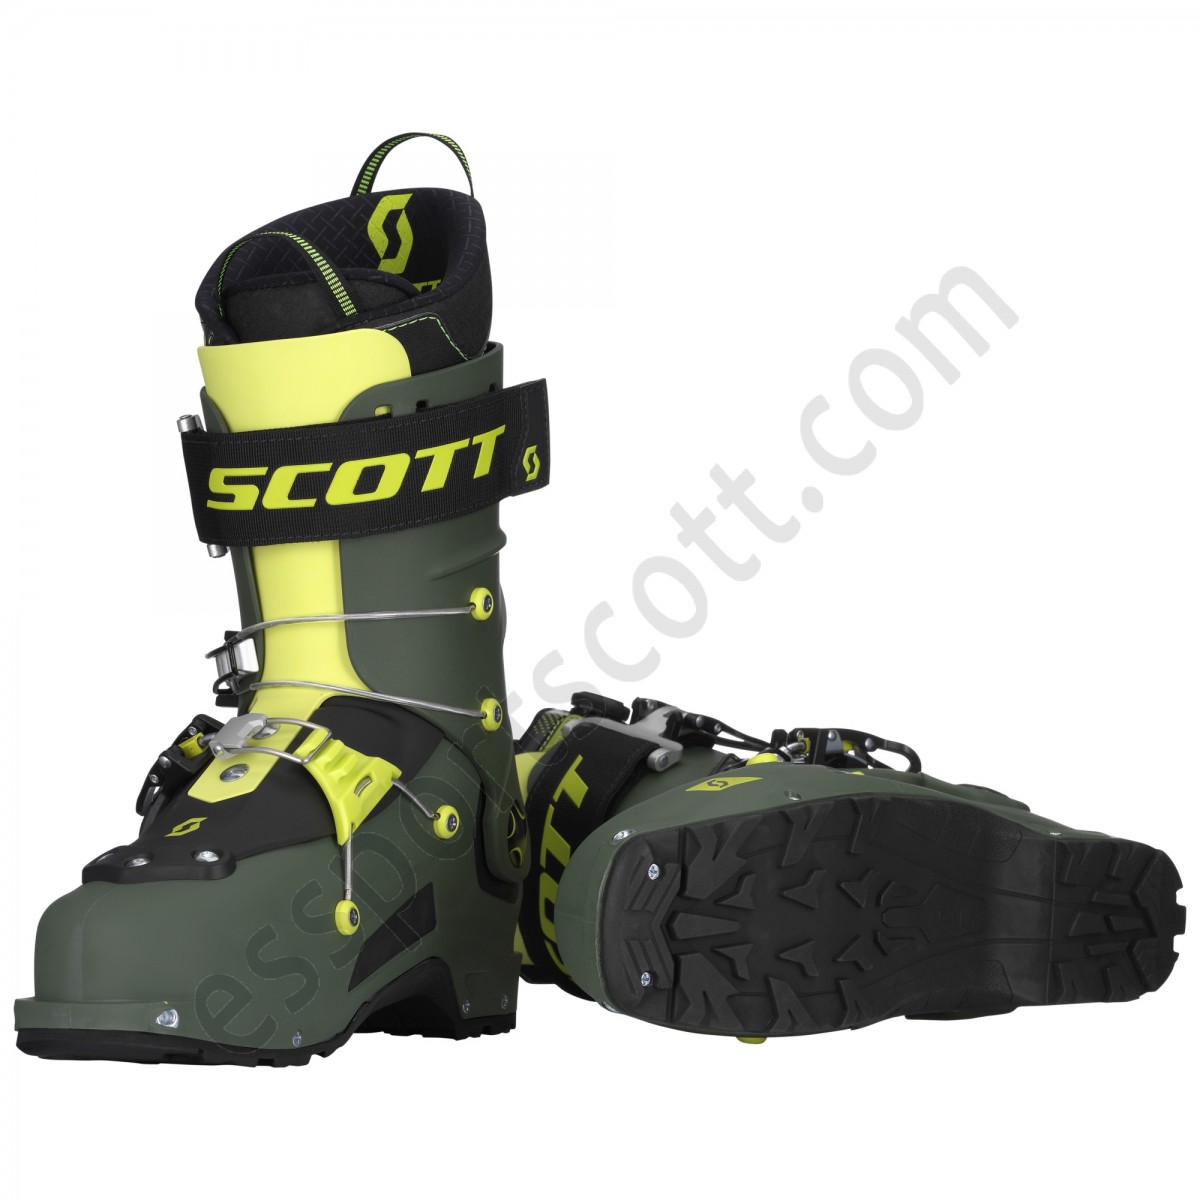 Scott Tienda ◇ Freeguide Carbon Ski Boot - -6